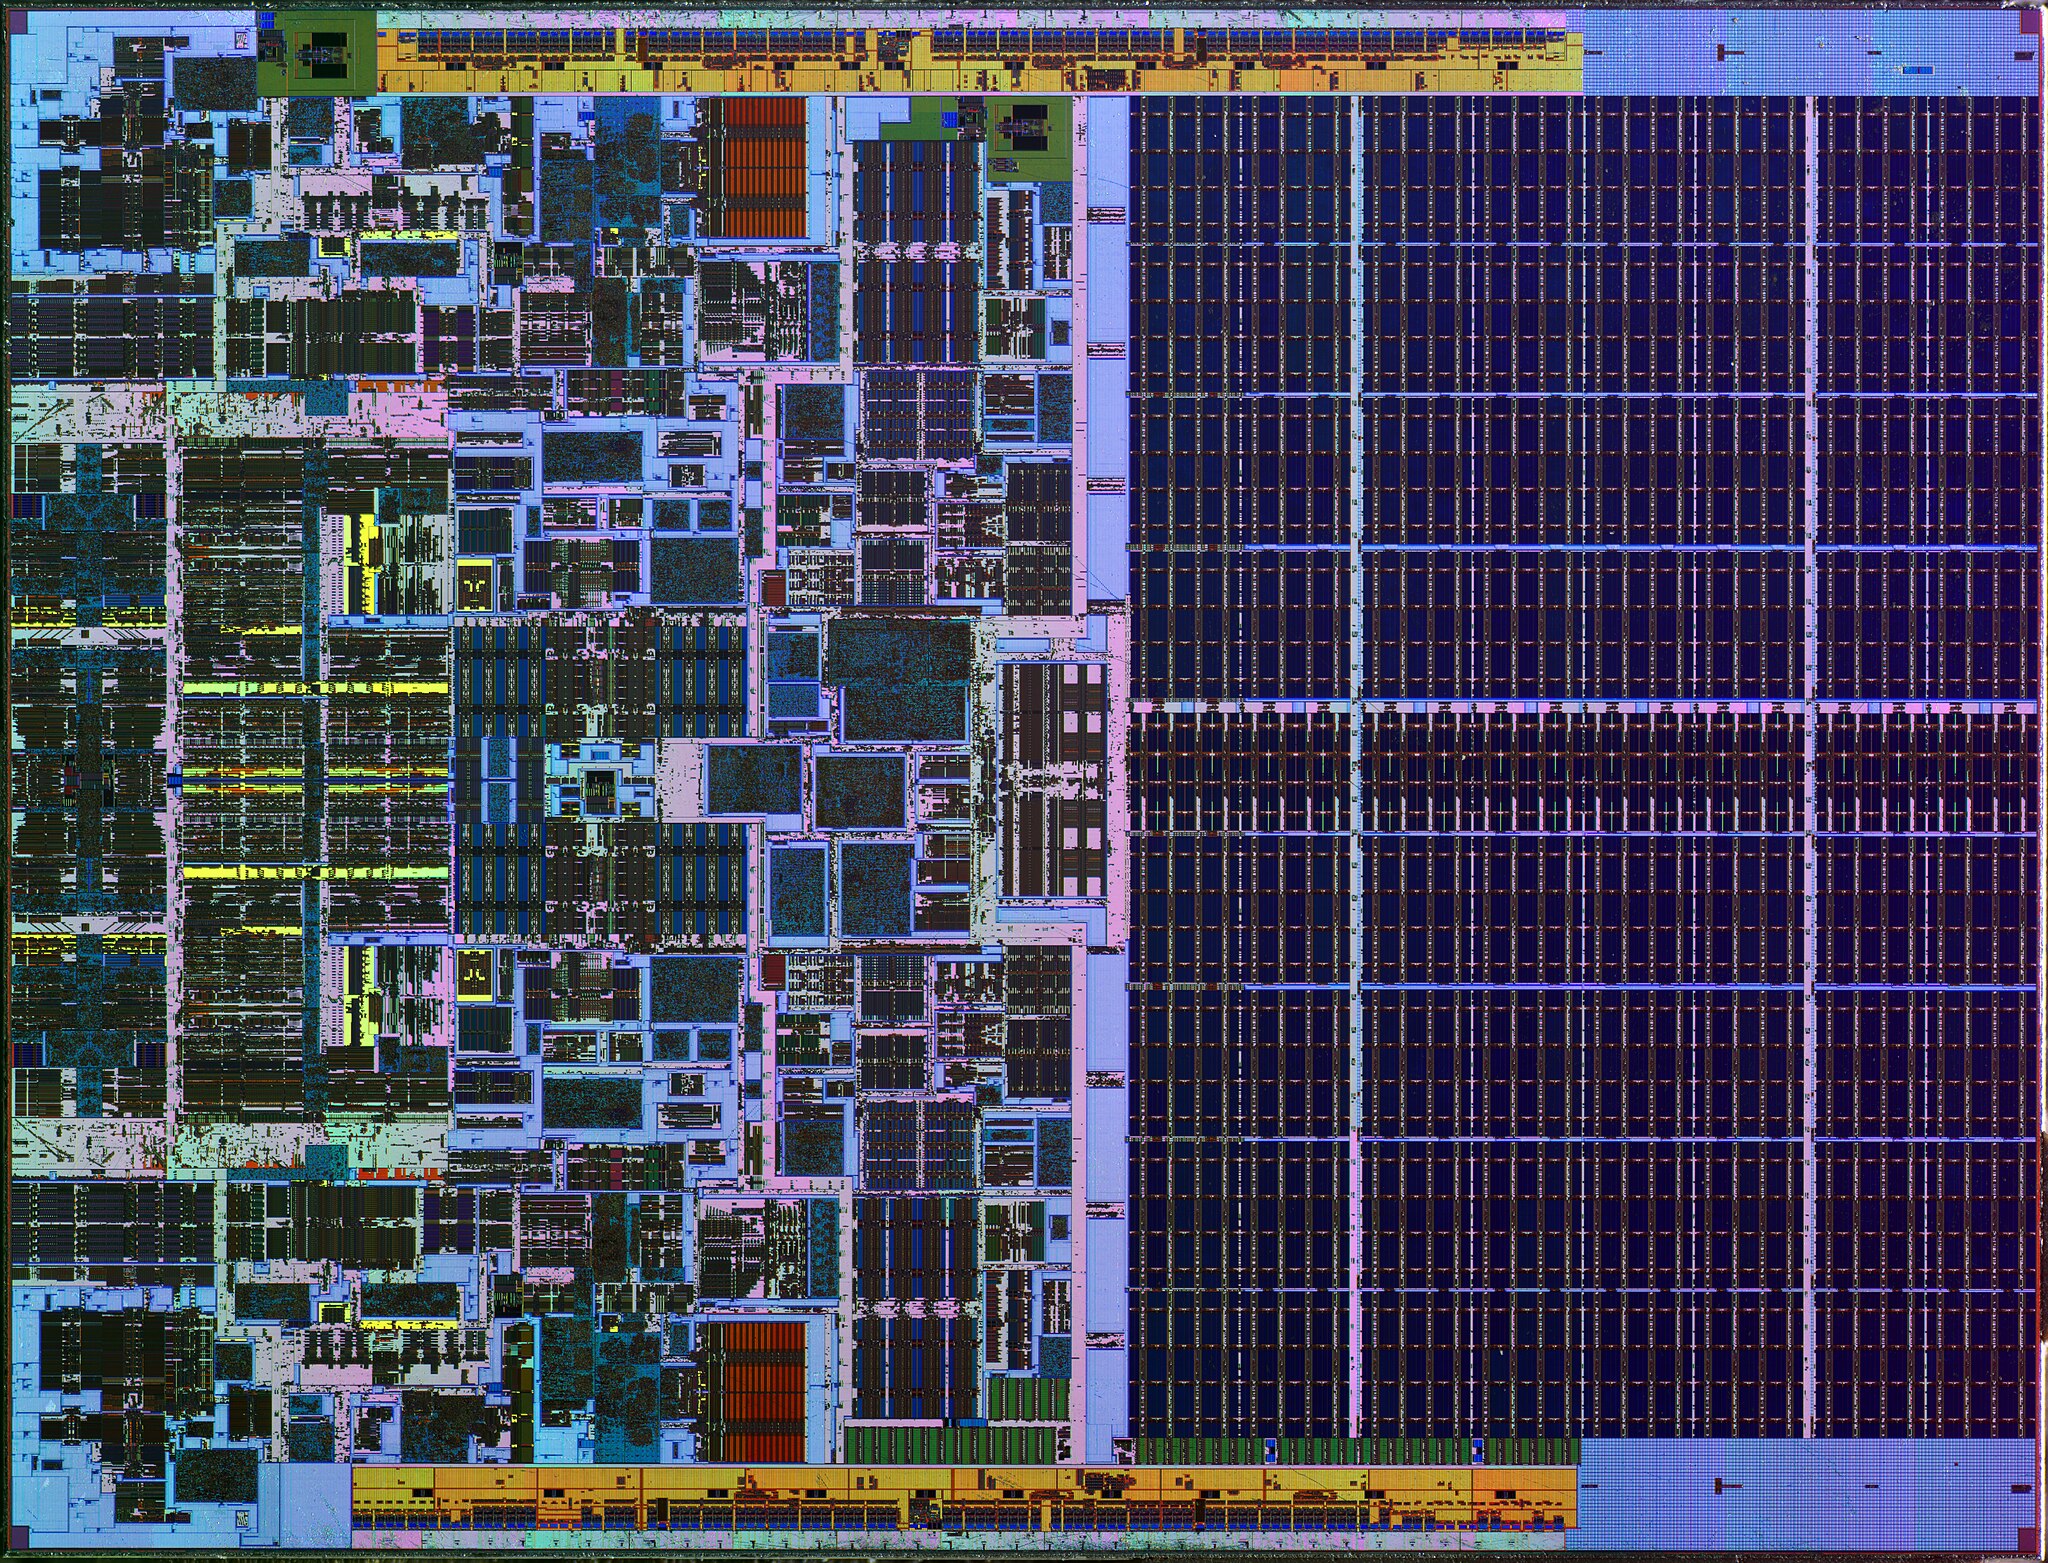 Intel Xeon 3060 Conroe (Reshoot) - Flickr - cole8888